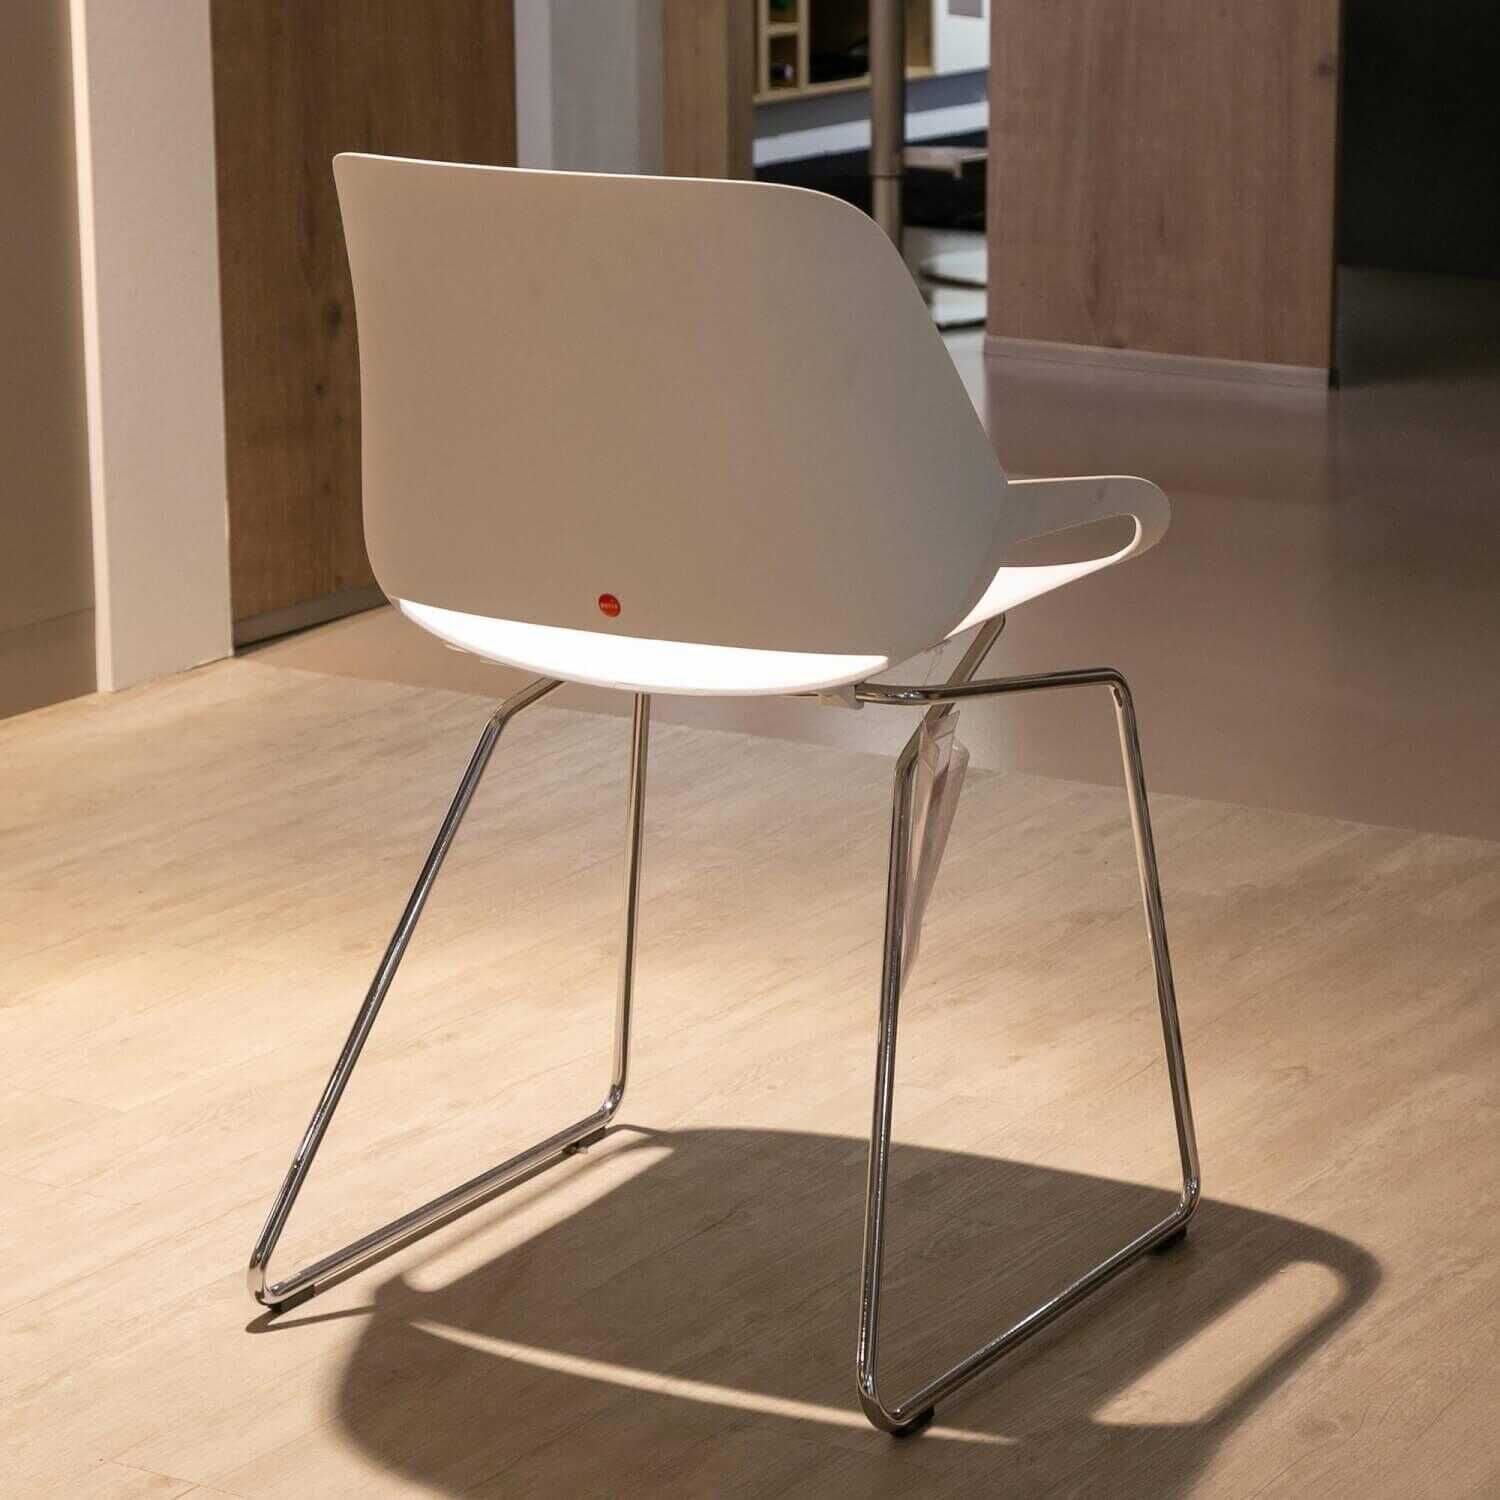 Stuhl Numo 1 Sitzschale Kunststoff Weiß Gestell Chrom Glanz